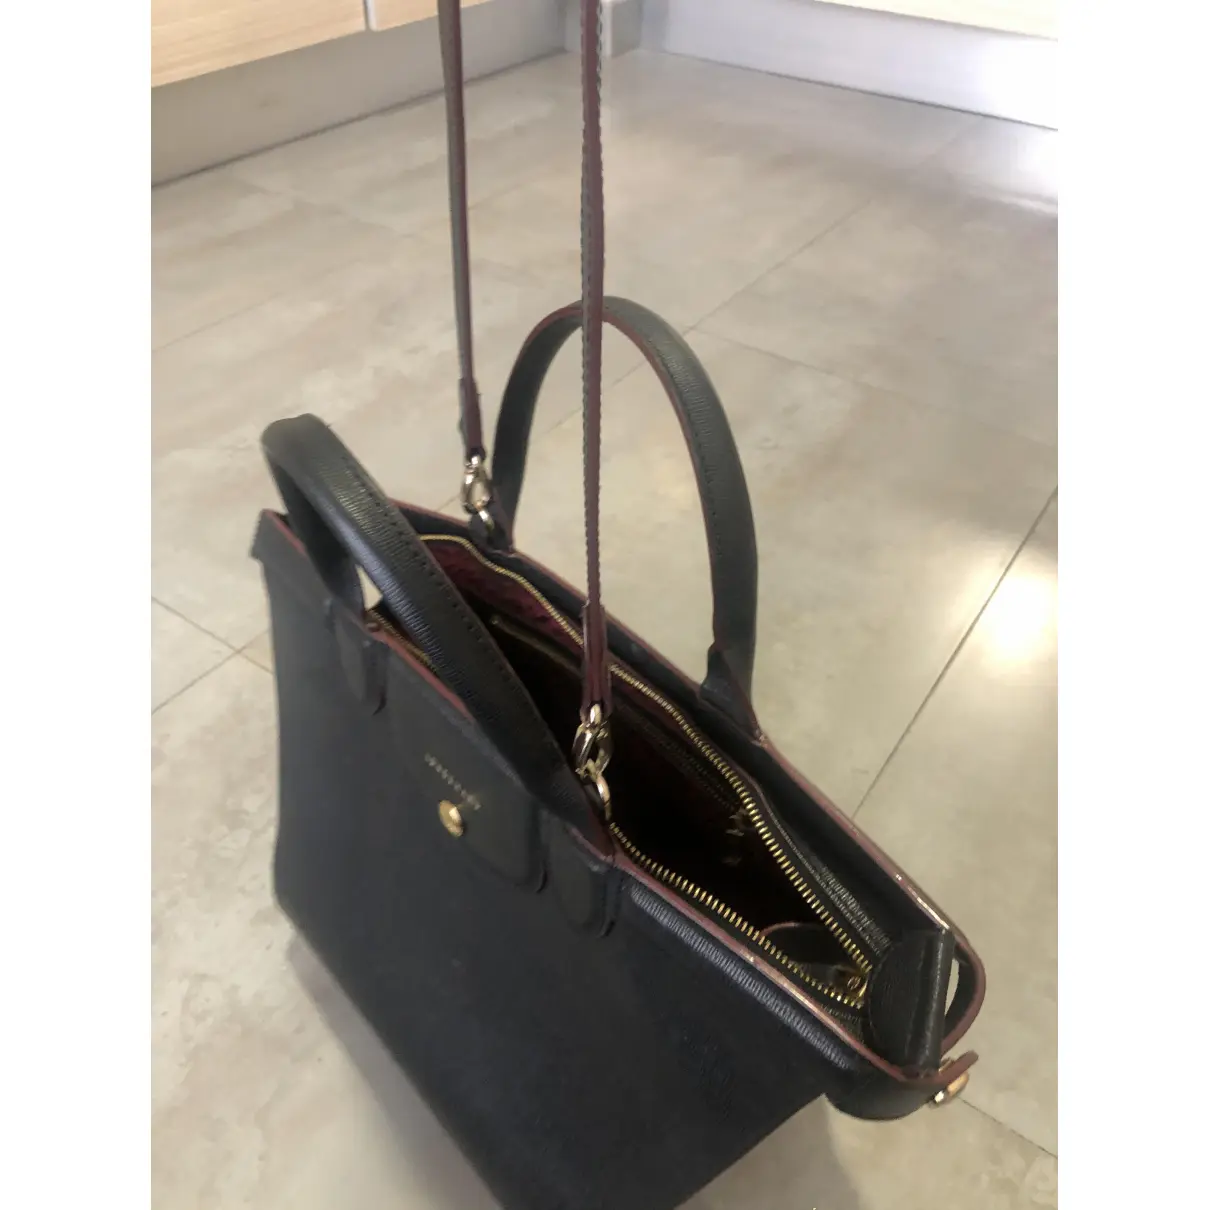 Buy Longchamp Pliage  leather handbag online